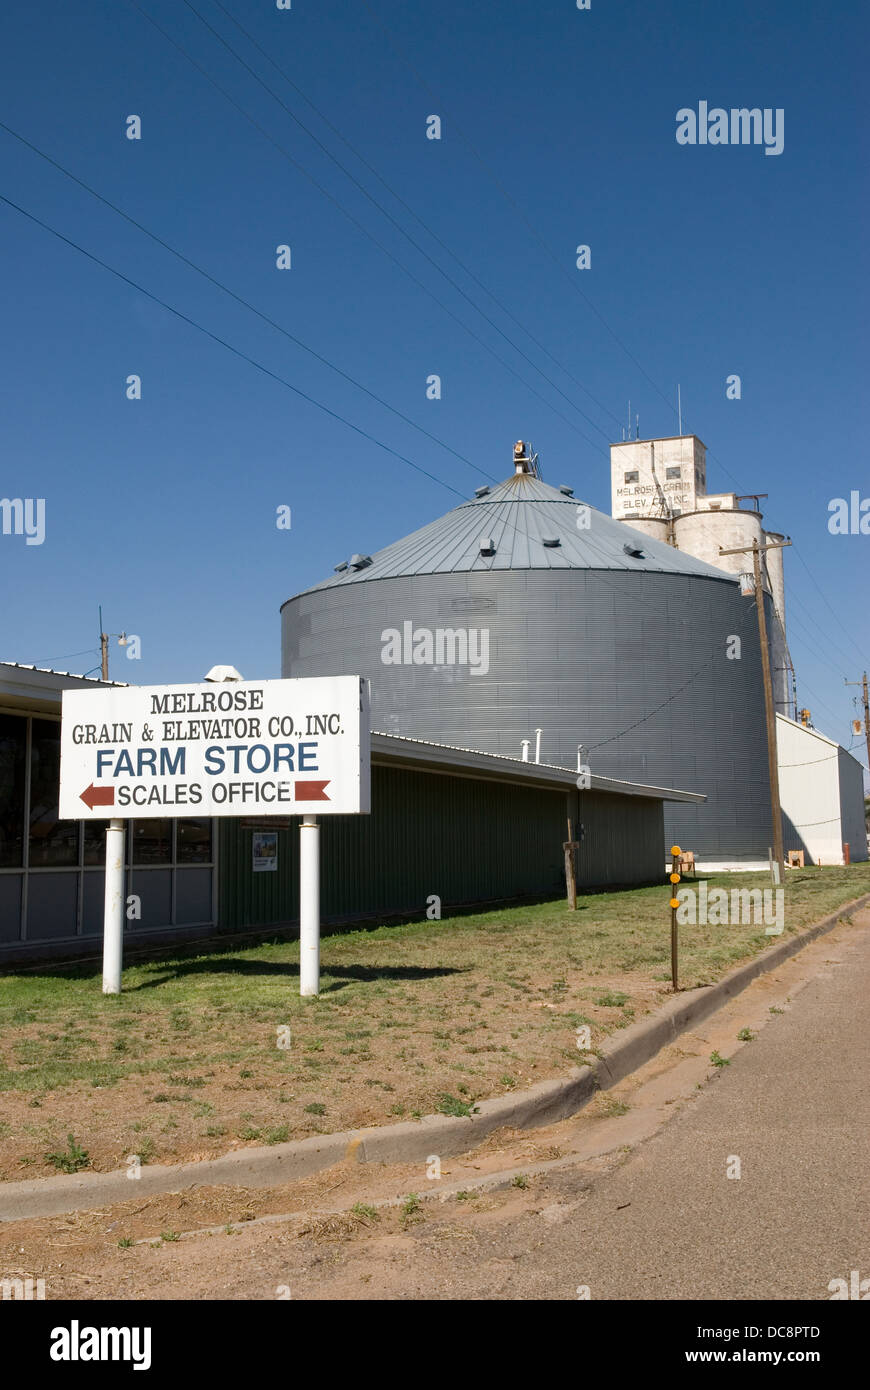 Melrose Grain and Elevator Company New Mexico USA Stock Photo